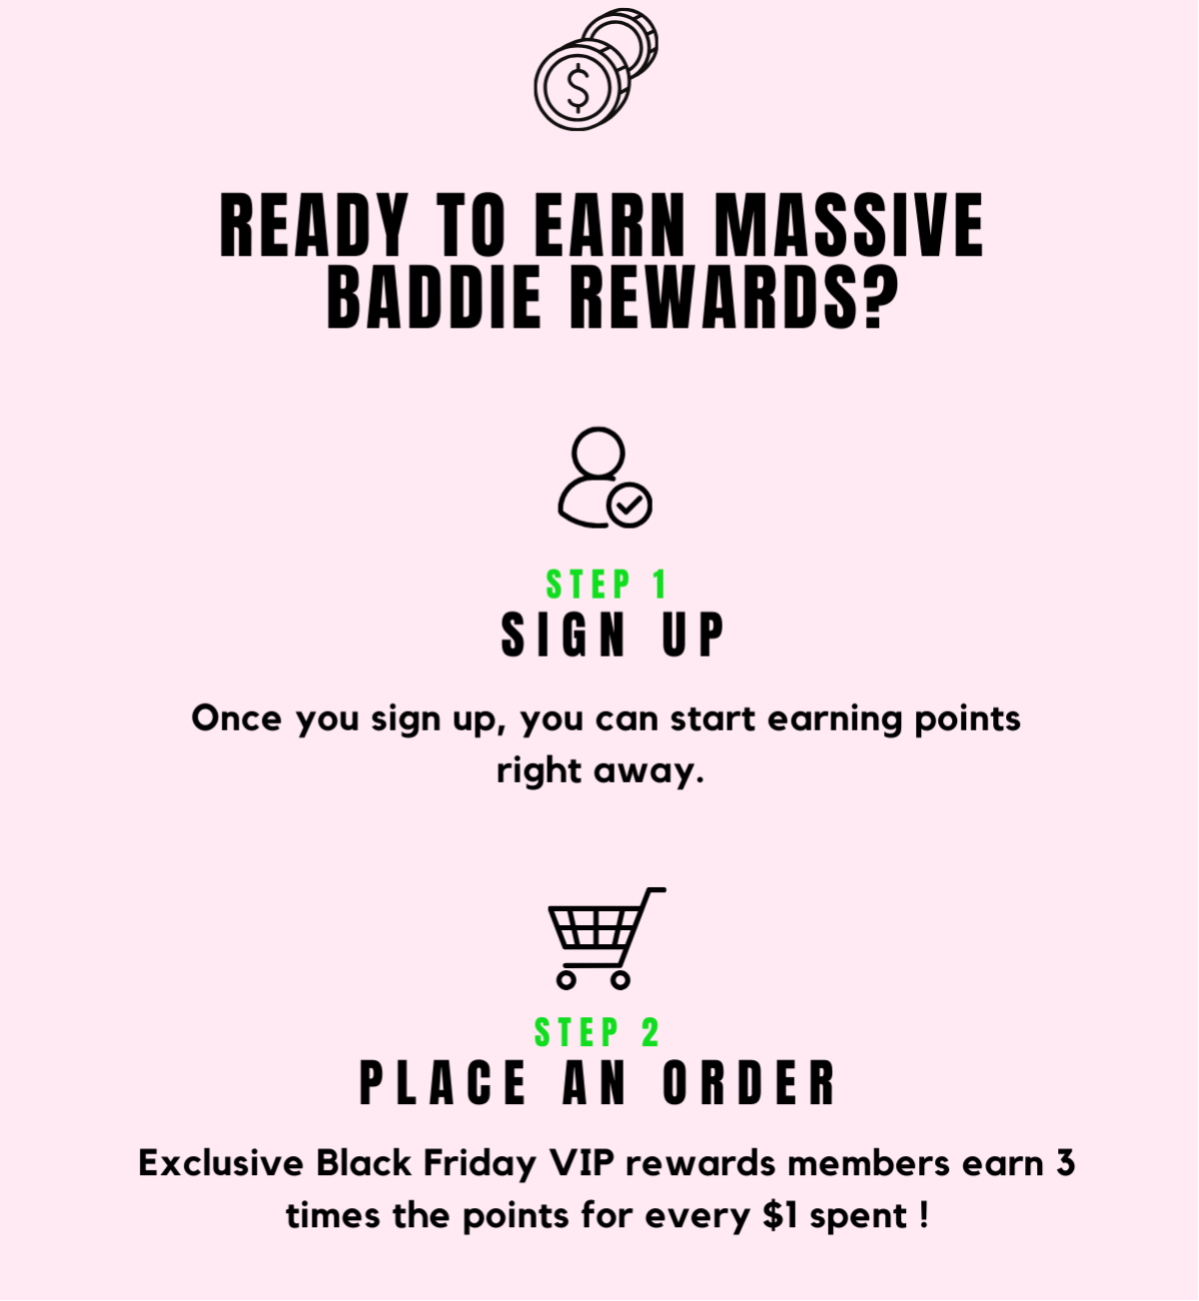 Ready to earn massive baddie rewards?